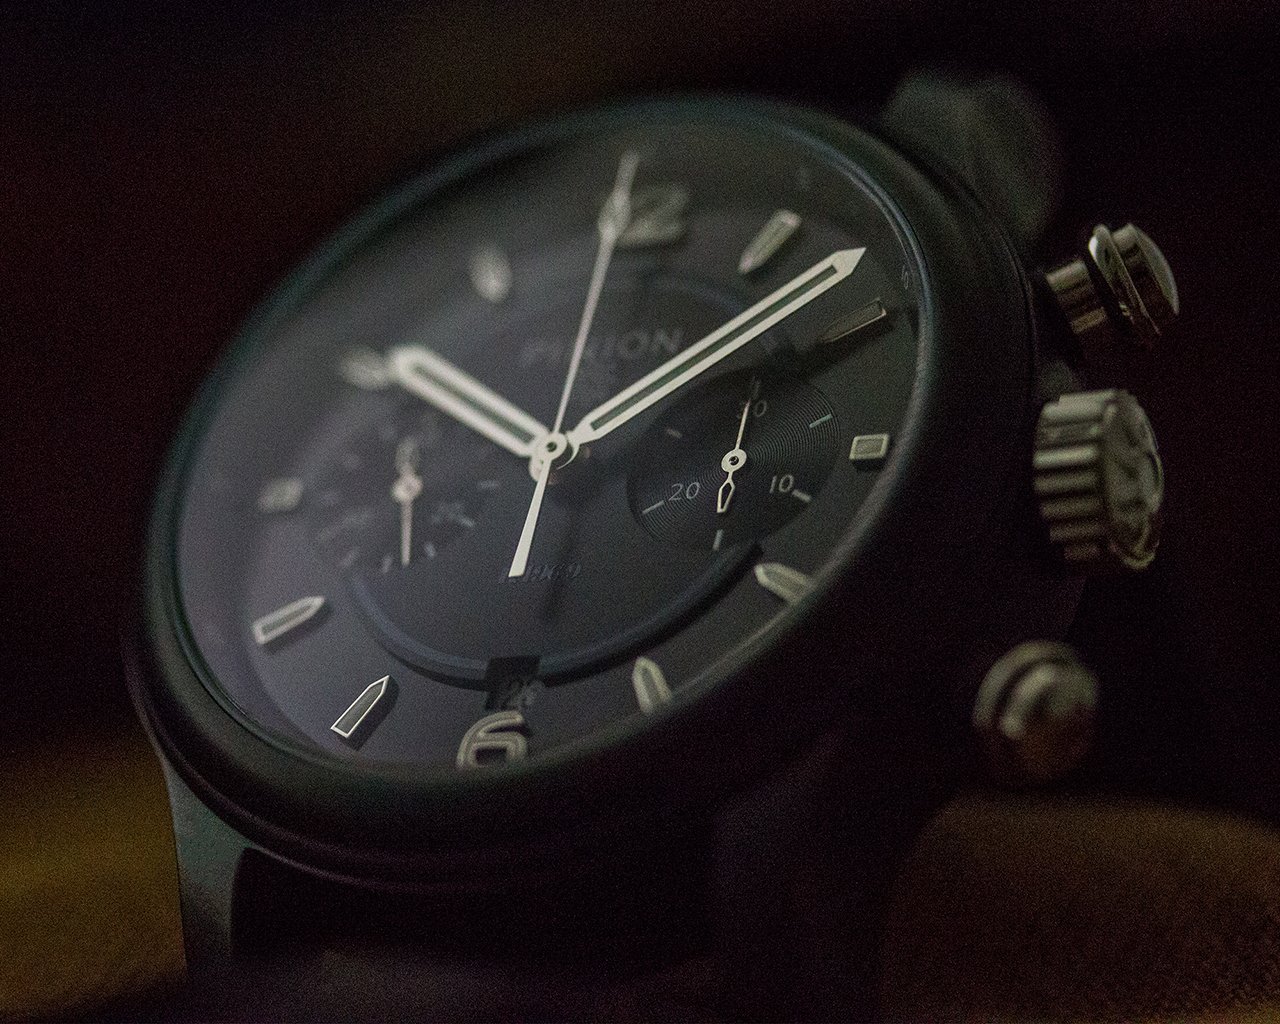 Pinion R-1969 Black watch